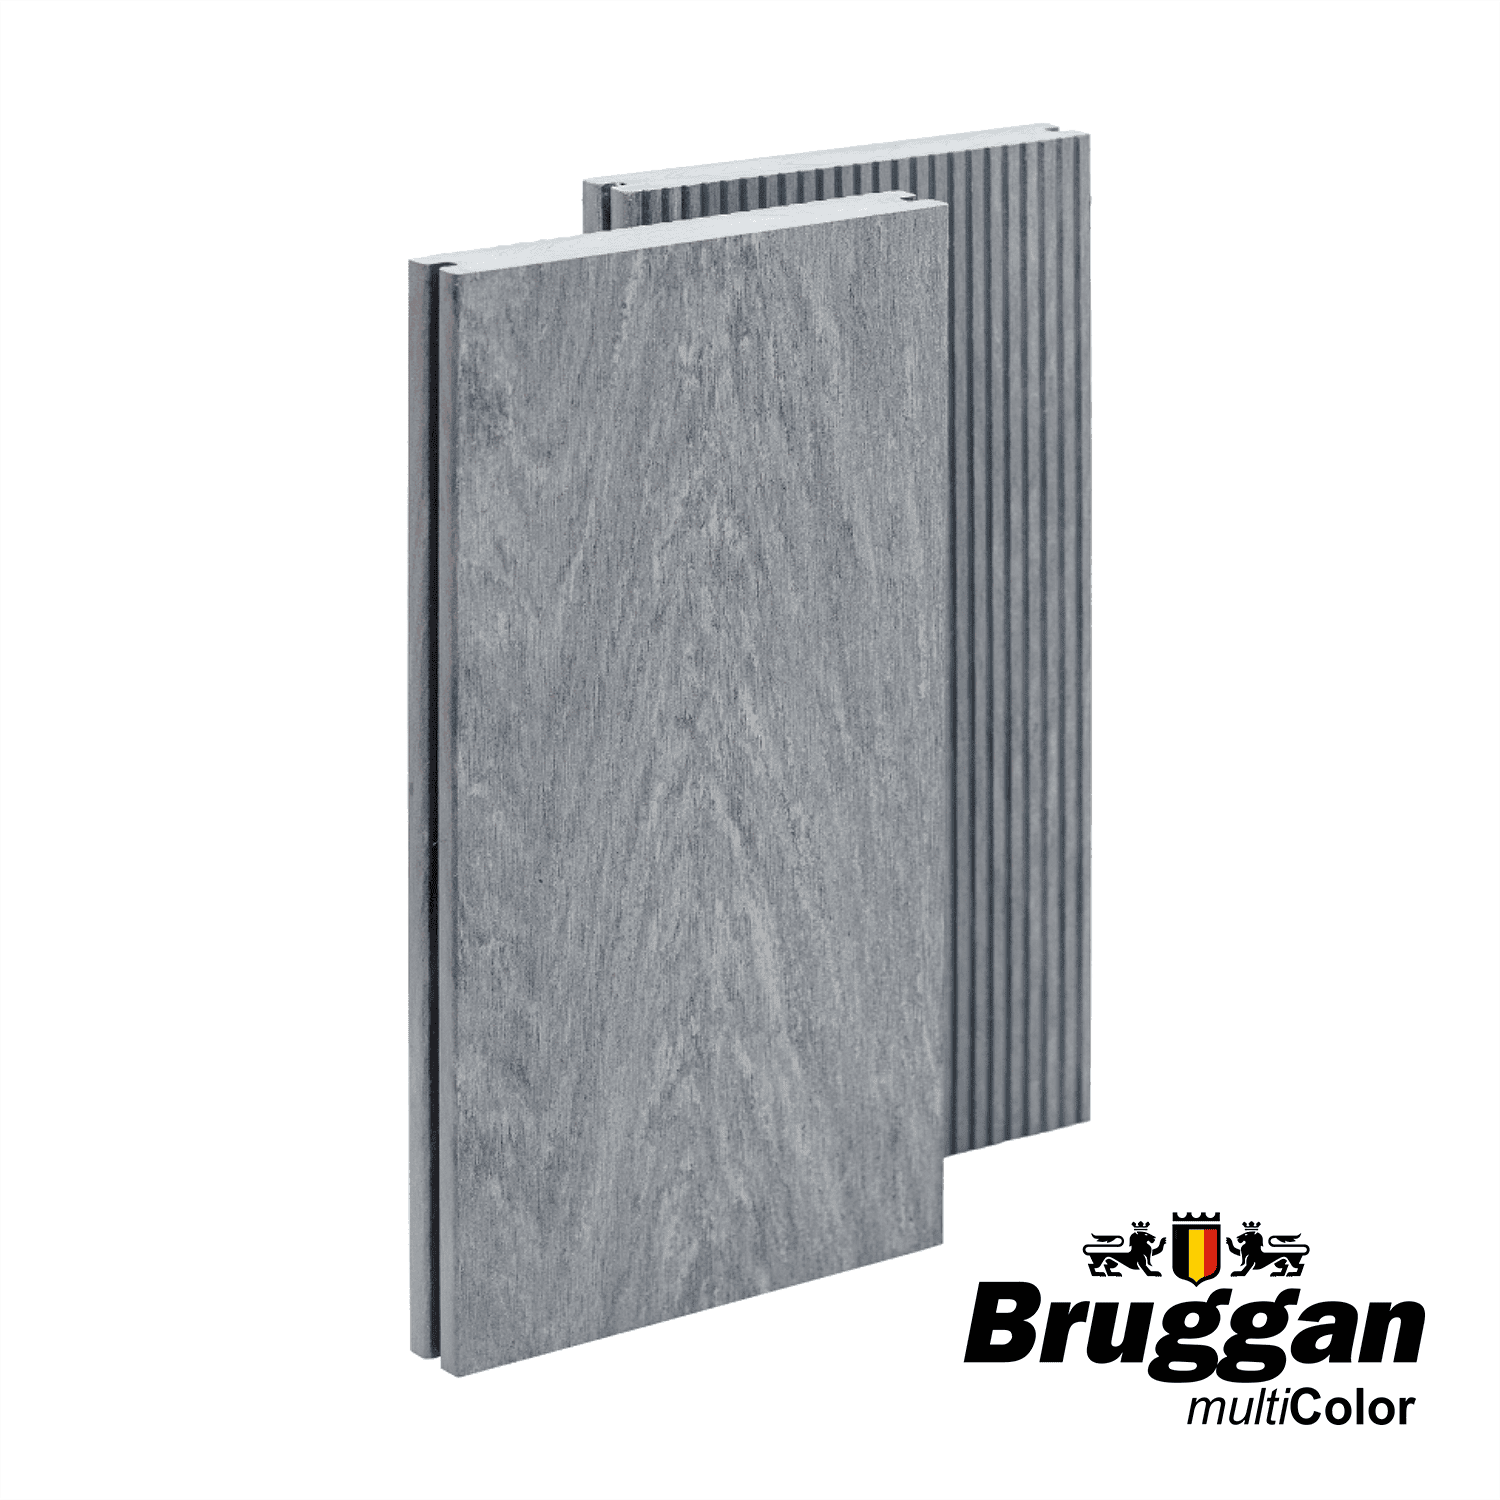 Террасная доска Bruggan Multicolor 140х19х3000мм Полнотелая Gray